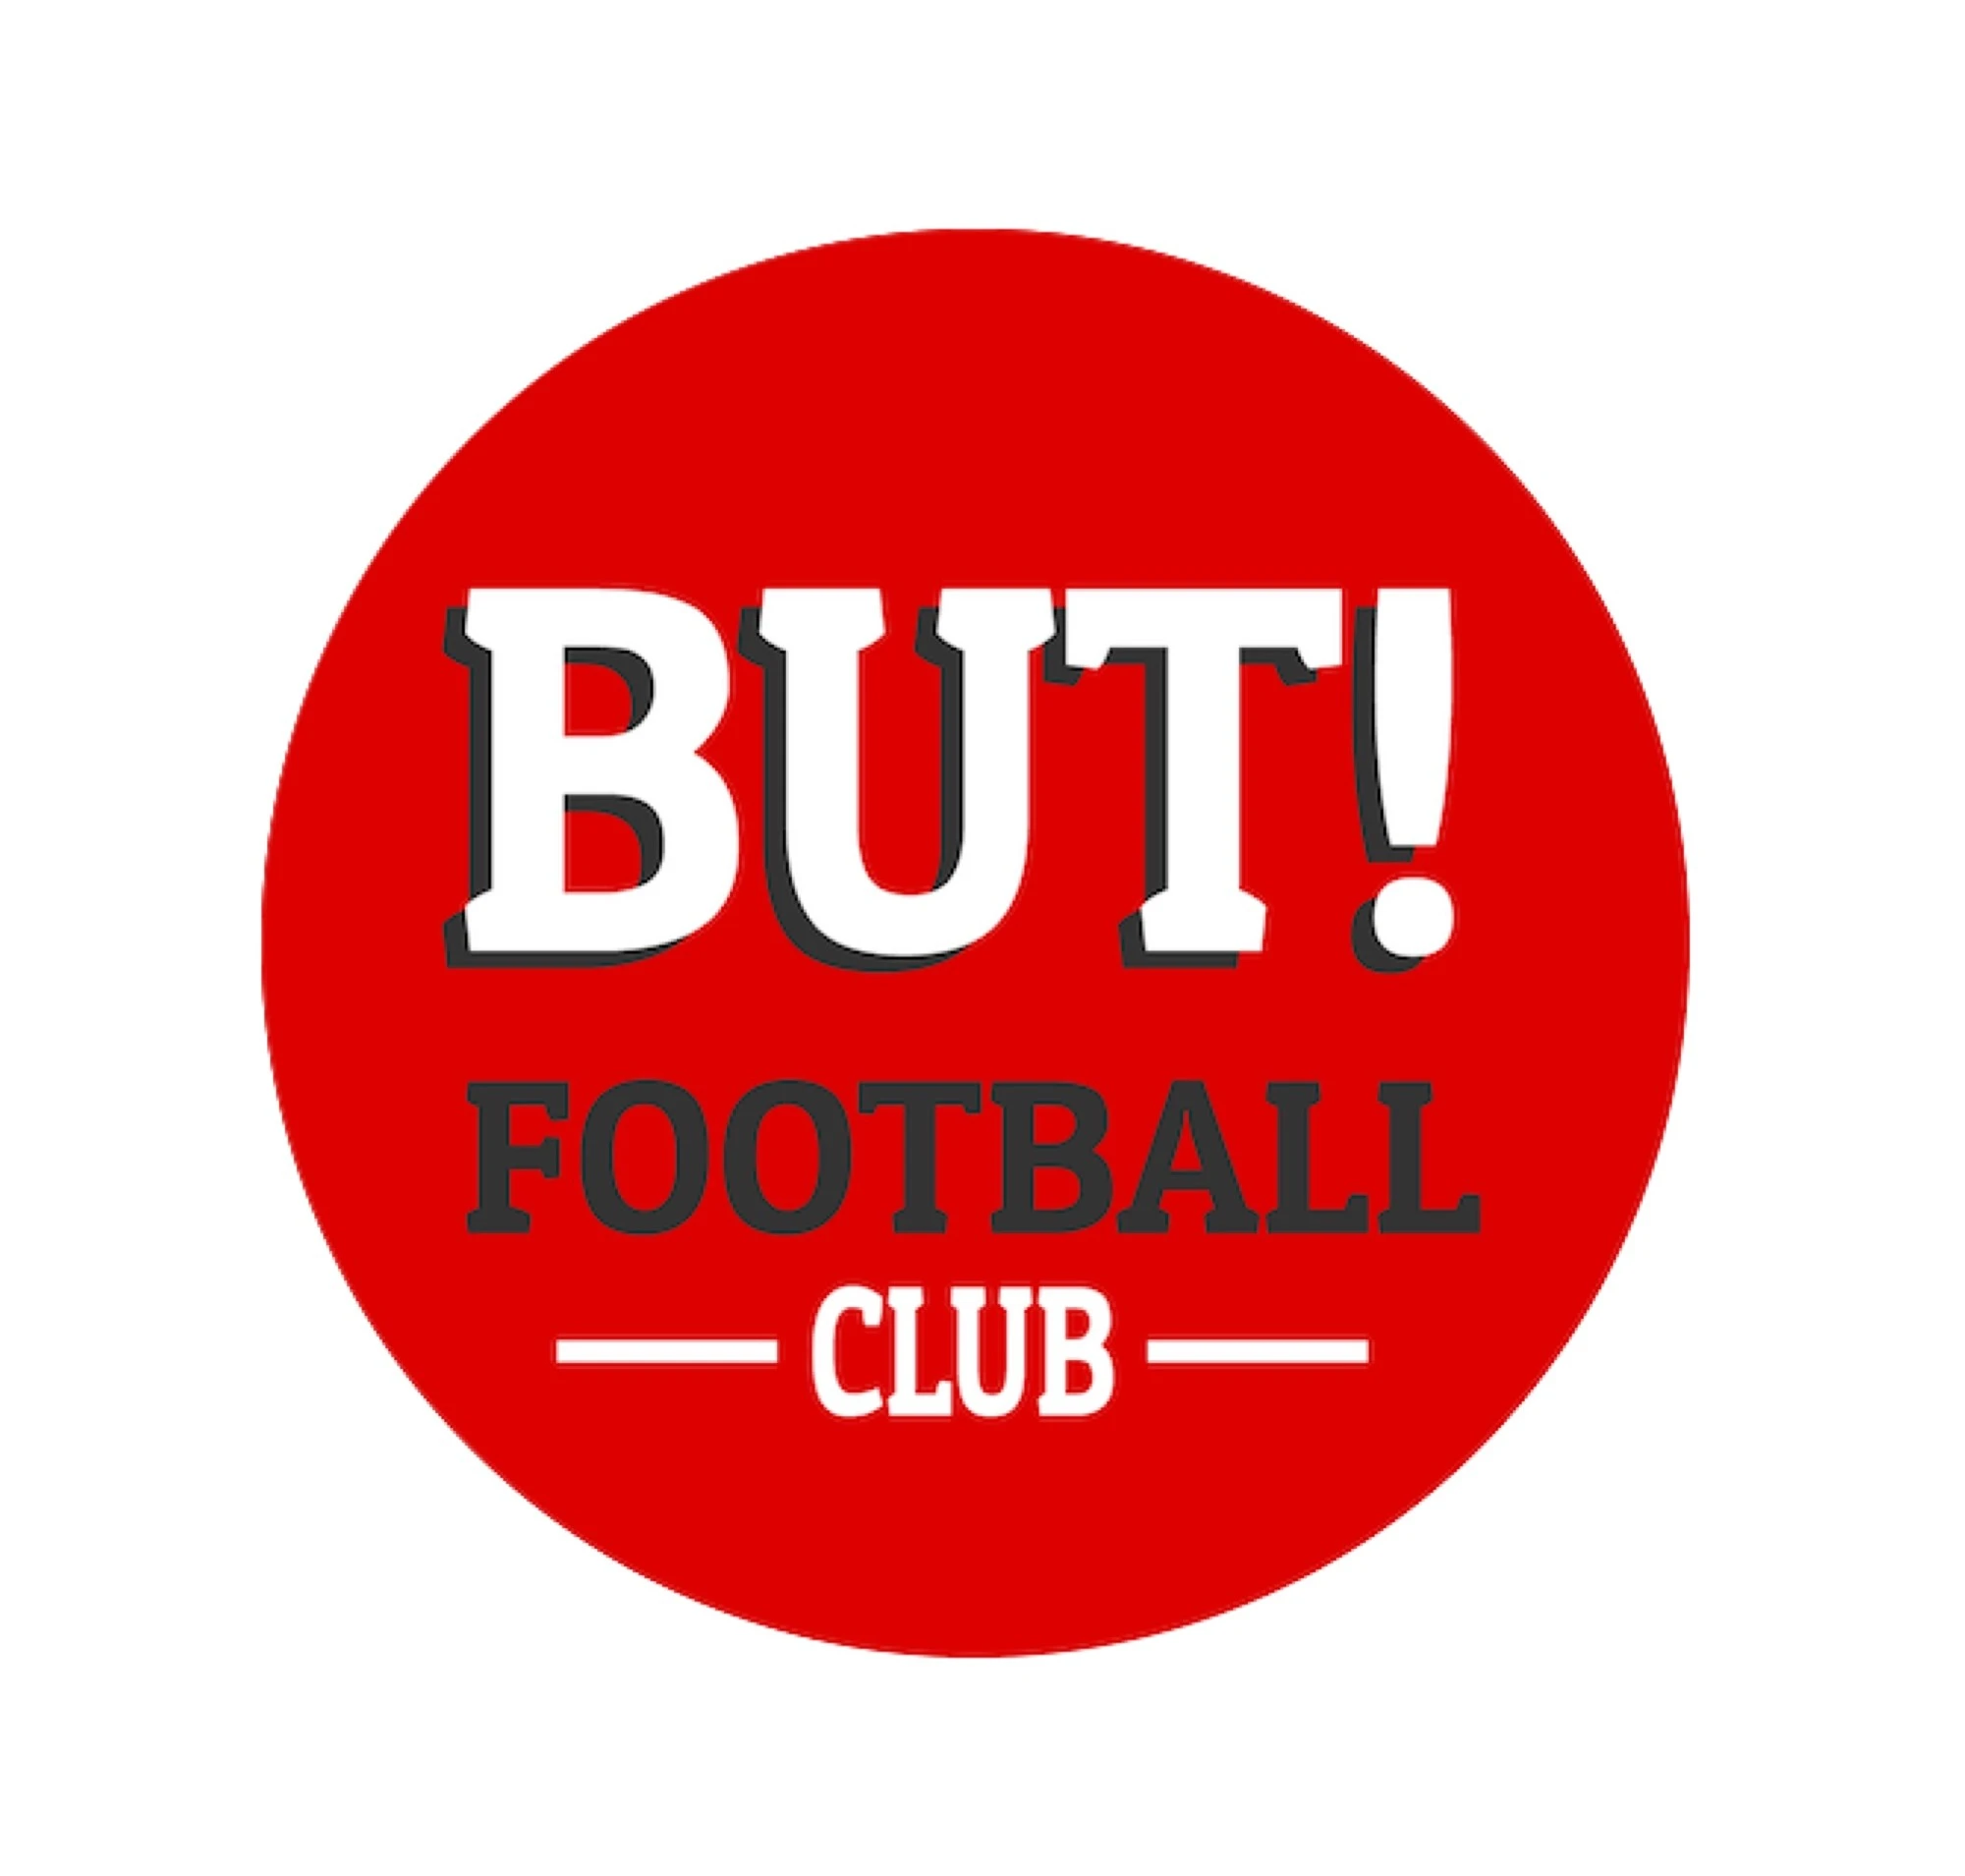 045200019091190-but-football-club-logo-carré-fond-blanc-17031526623135.jpg